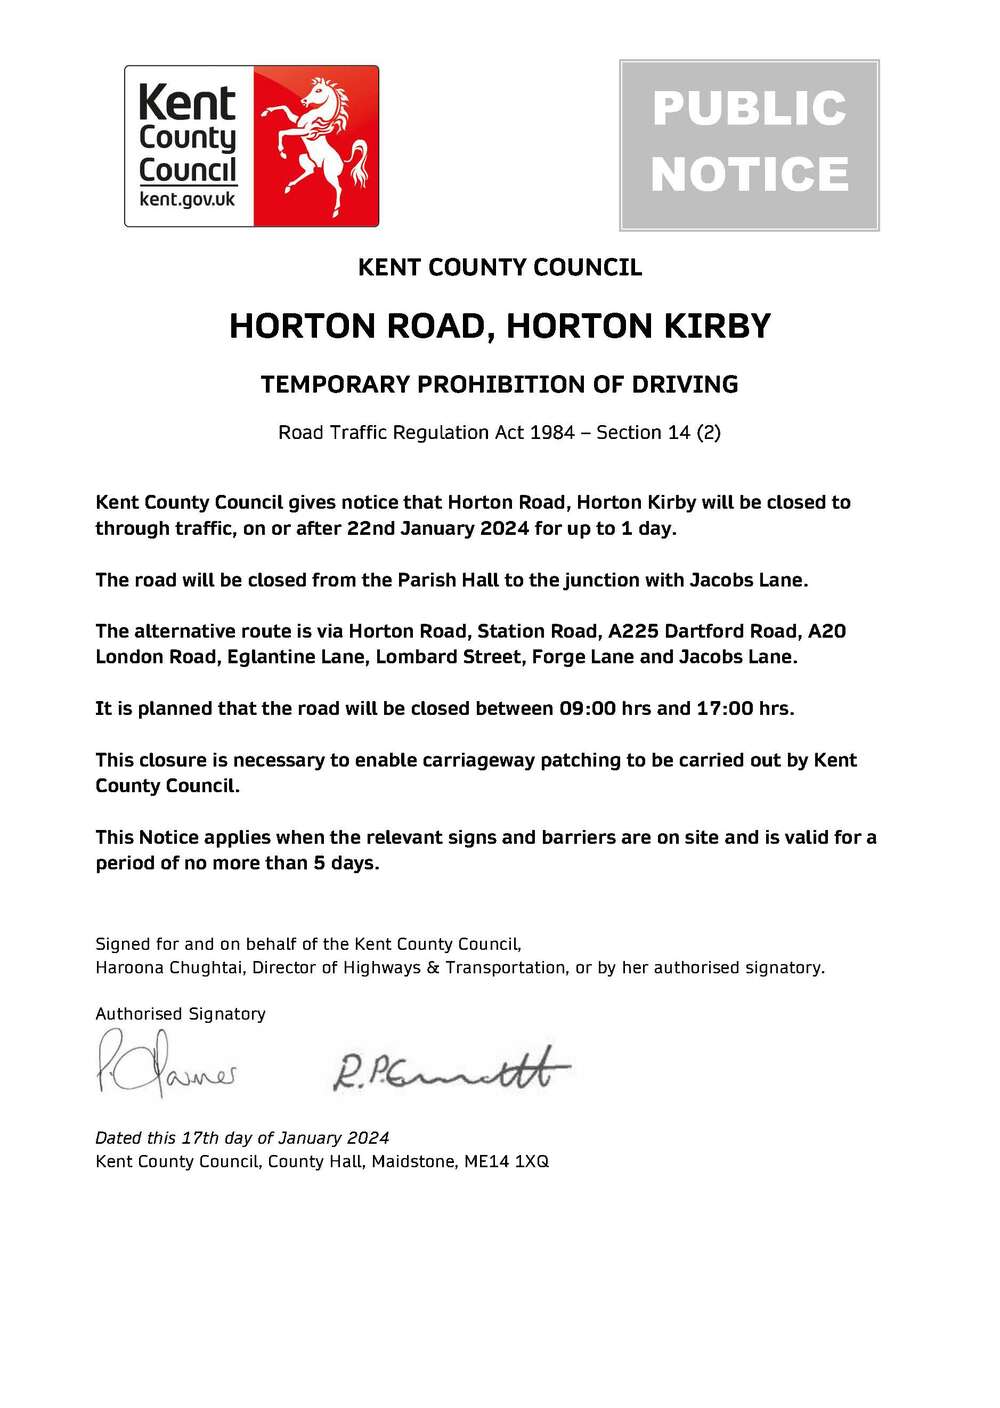 Emergency Road Closure - Horton Road 22nd January